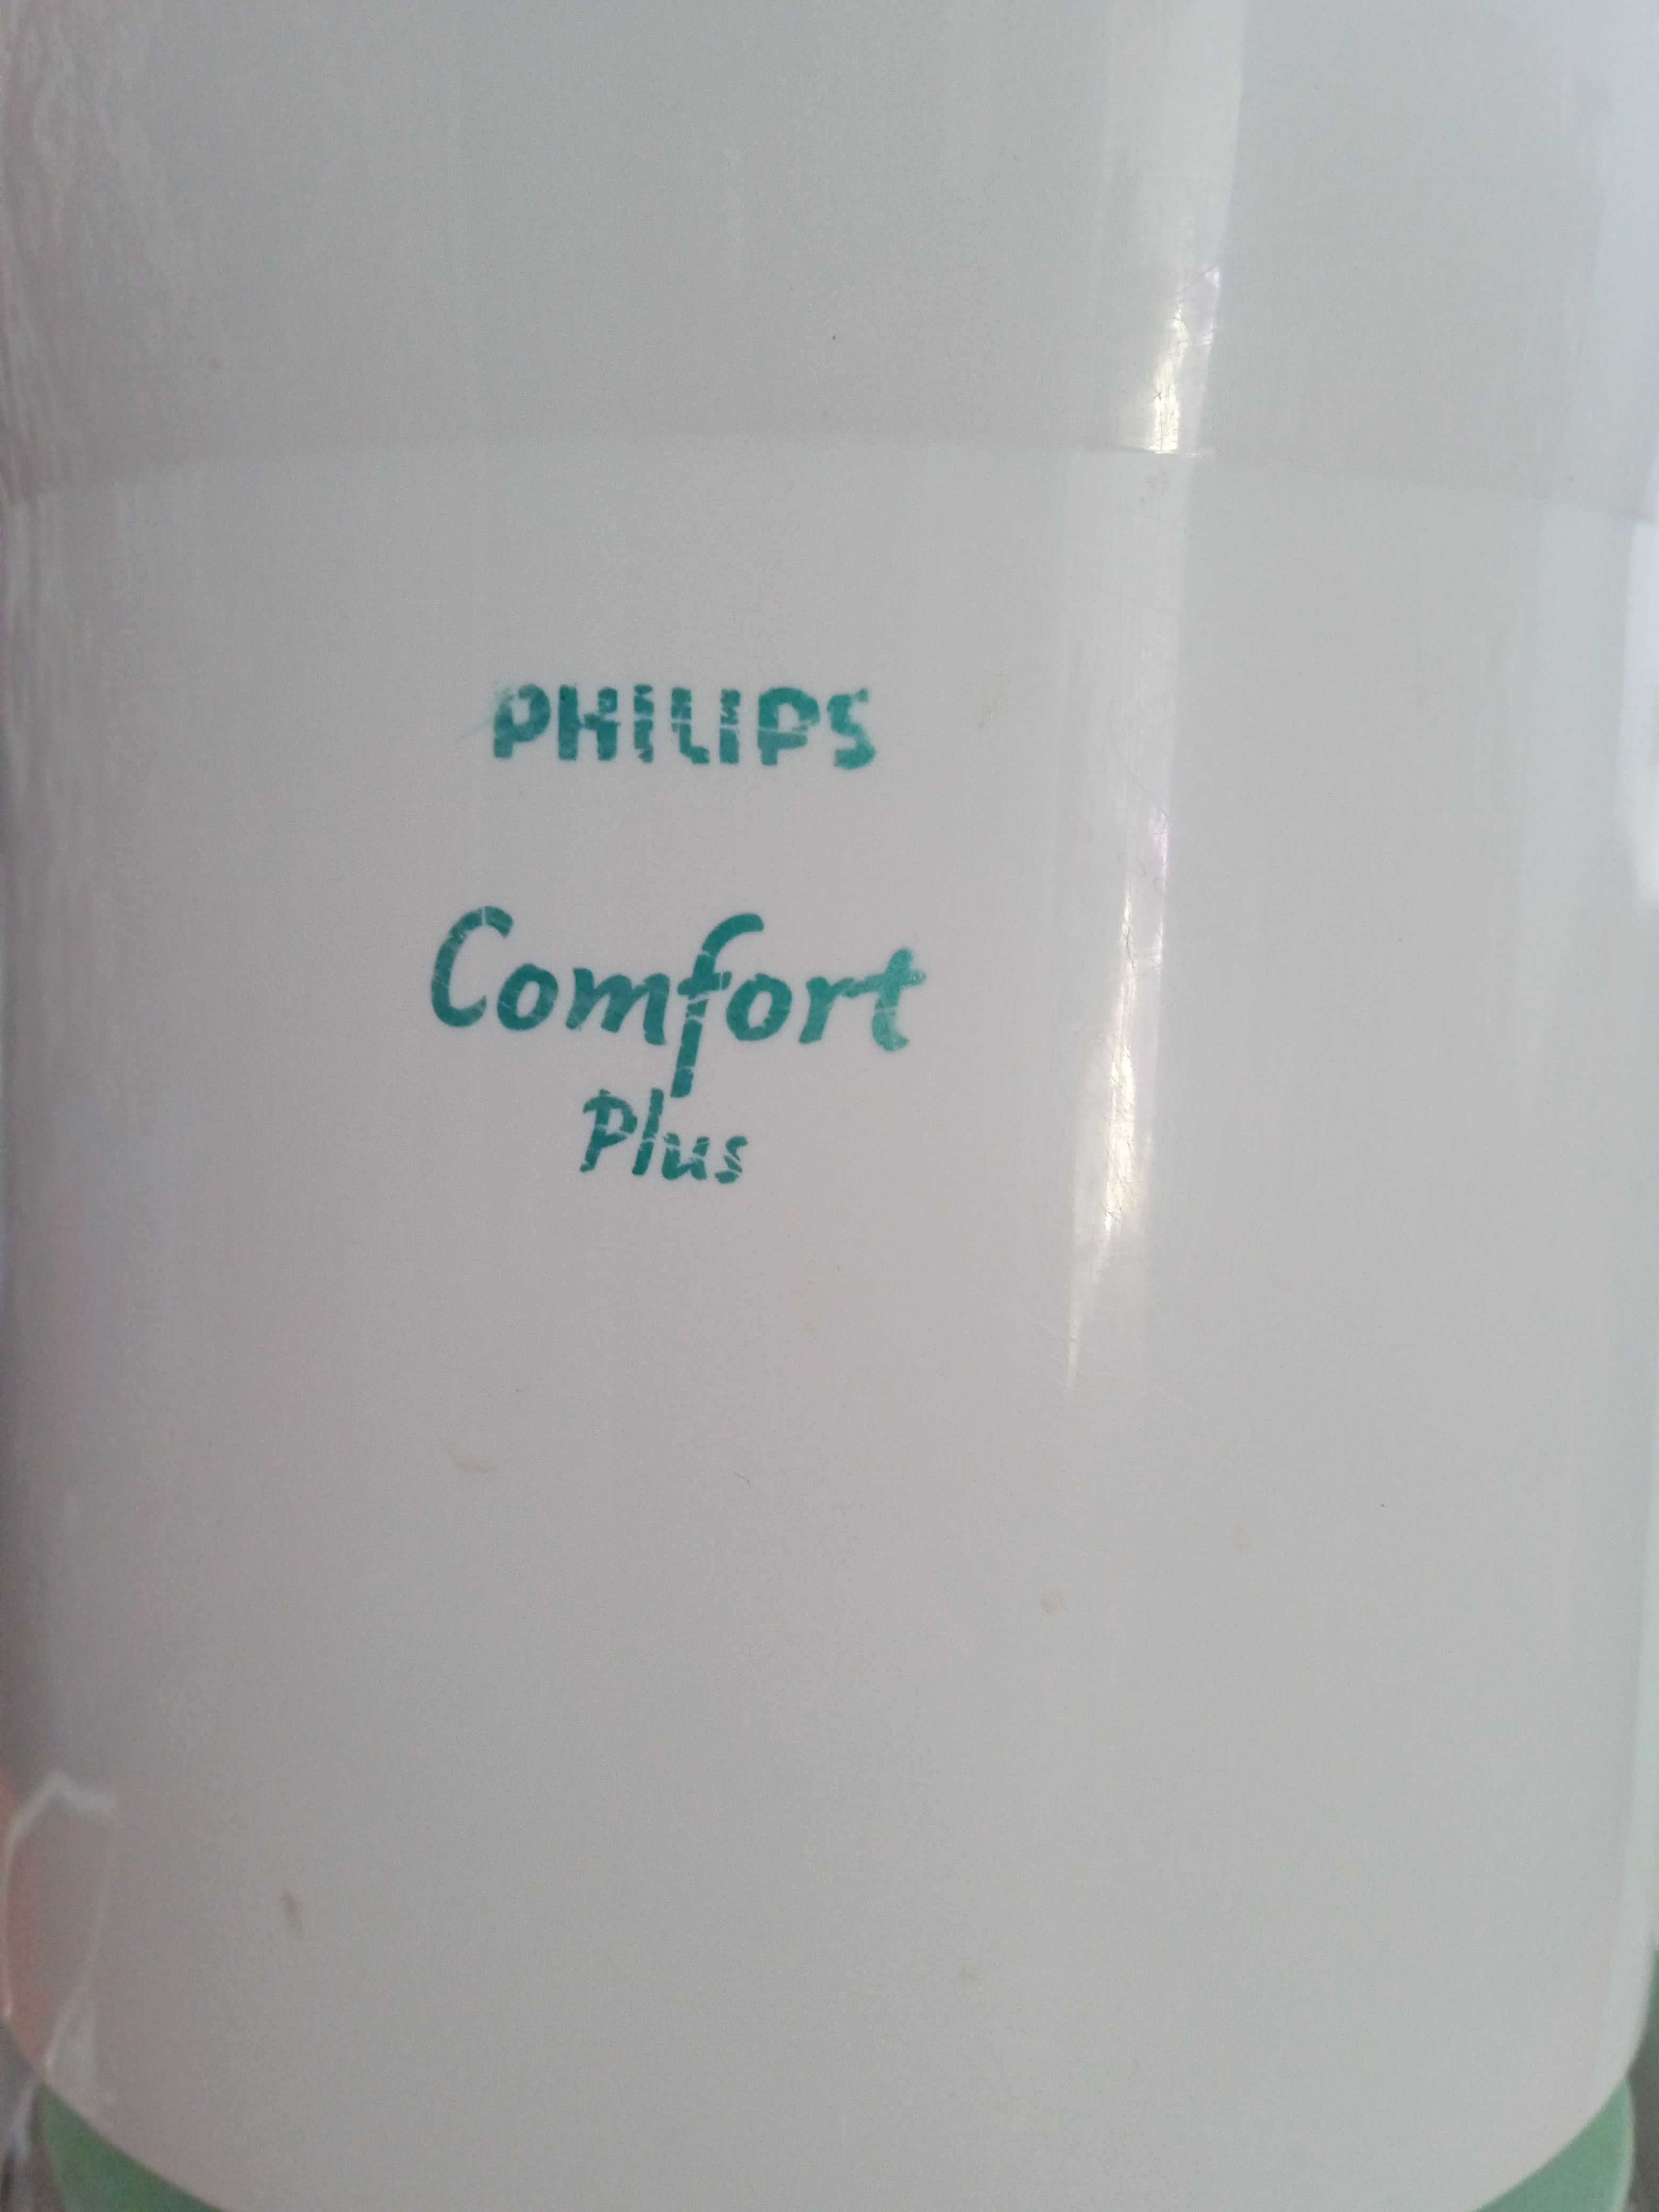 кавоварка (чаєварка)
Philips
Comfort plus